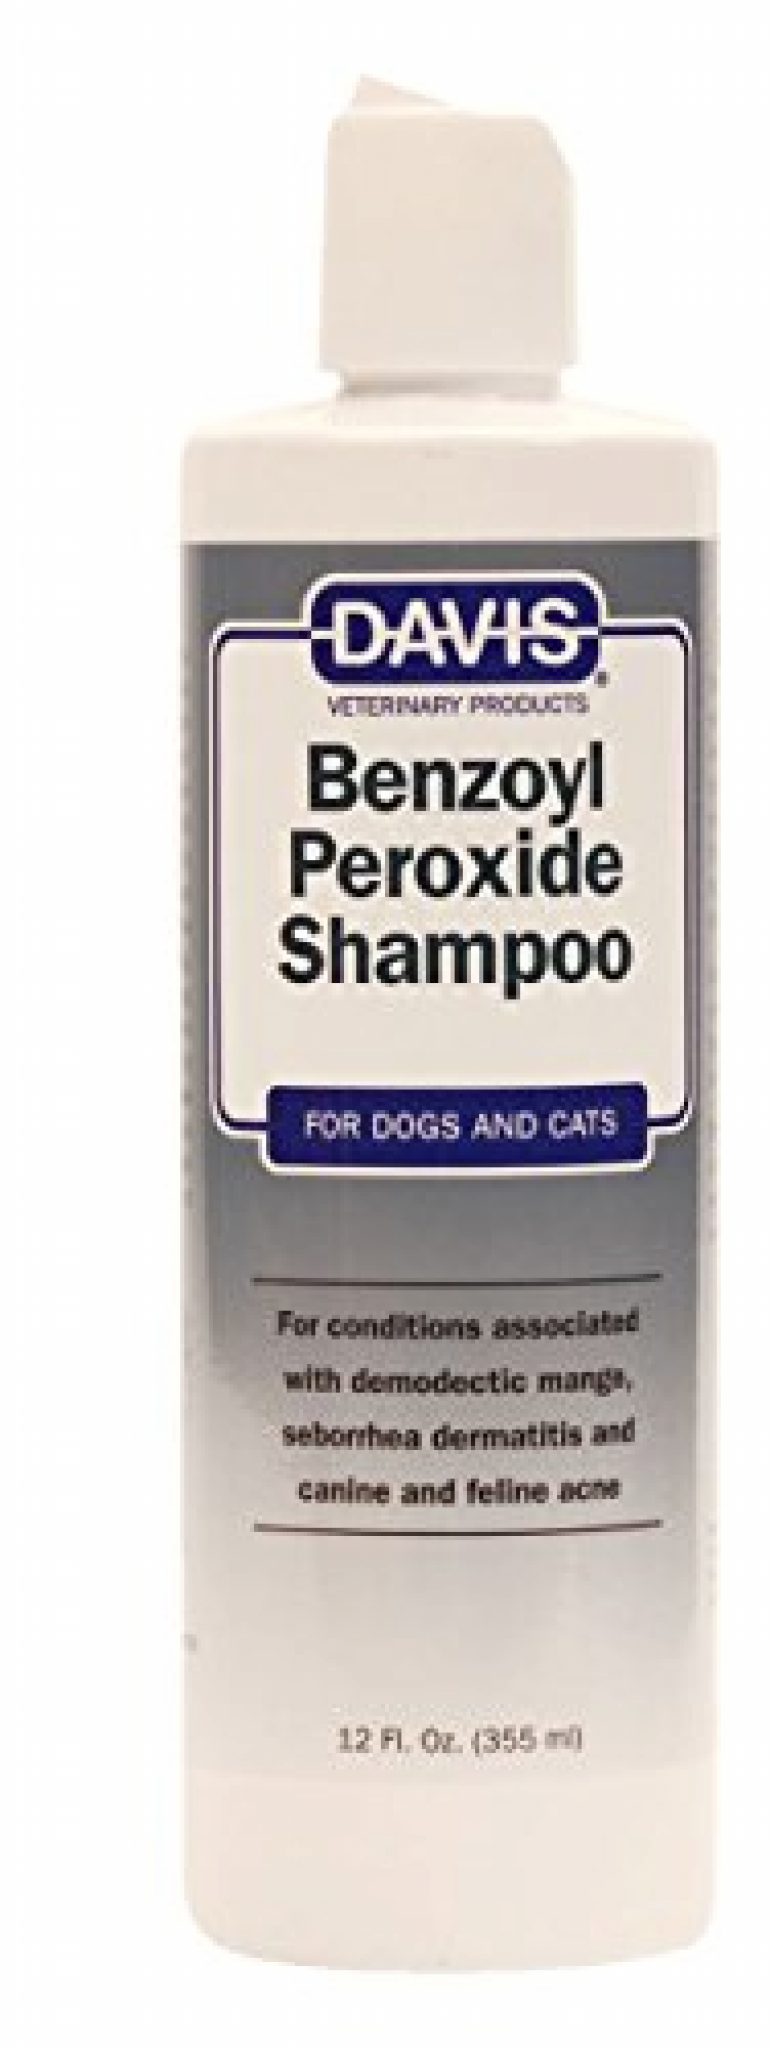 Davis Benzoyl Peroxide Medicated Dog And Cat Shampoo 12 Oz Dermatitis